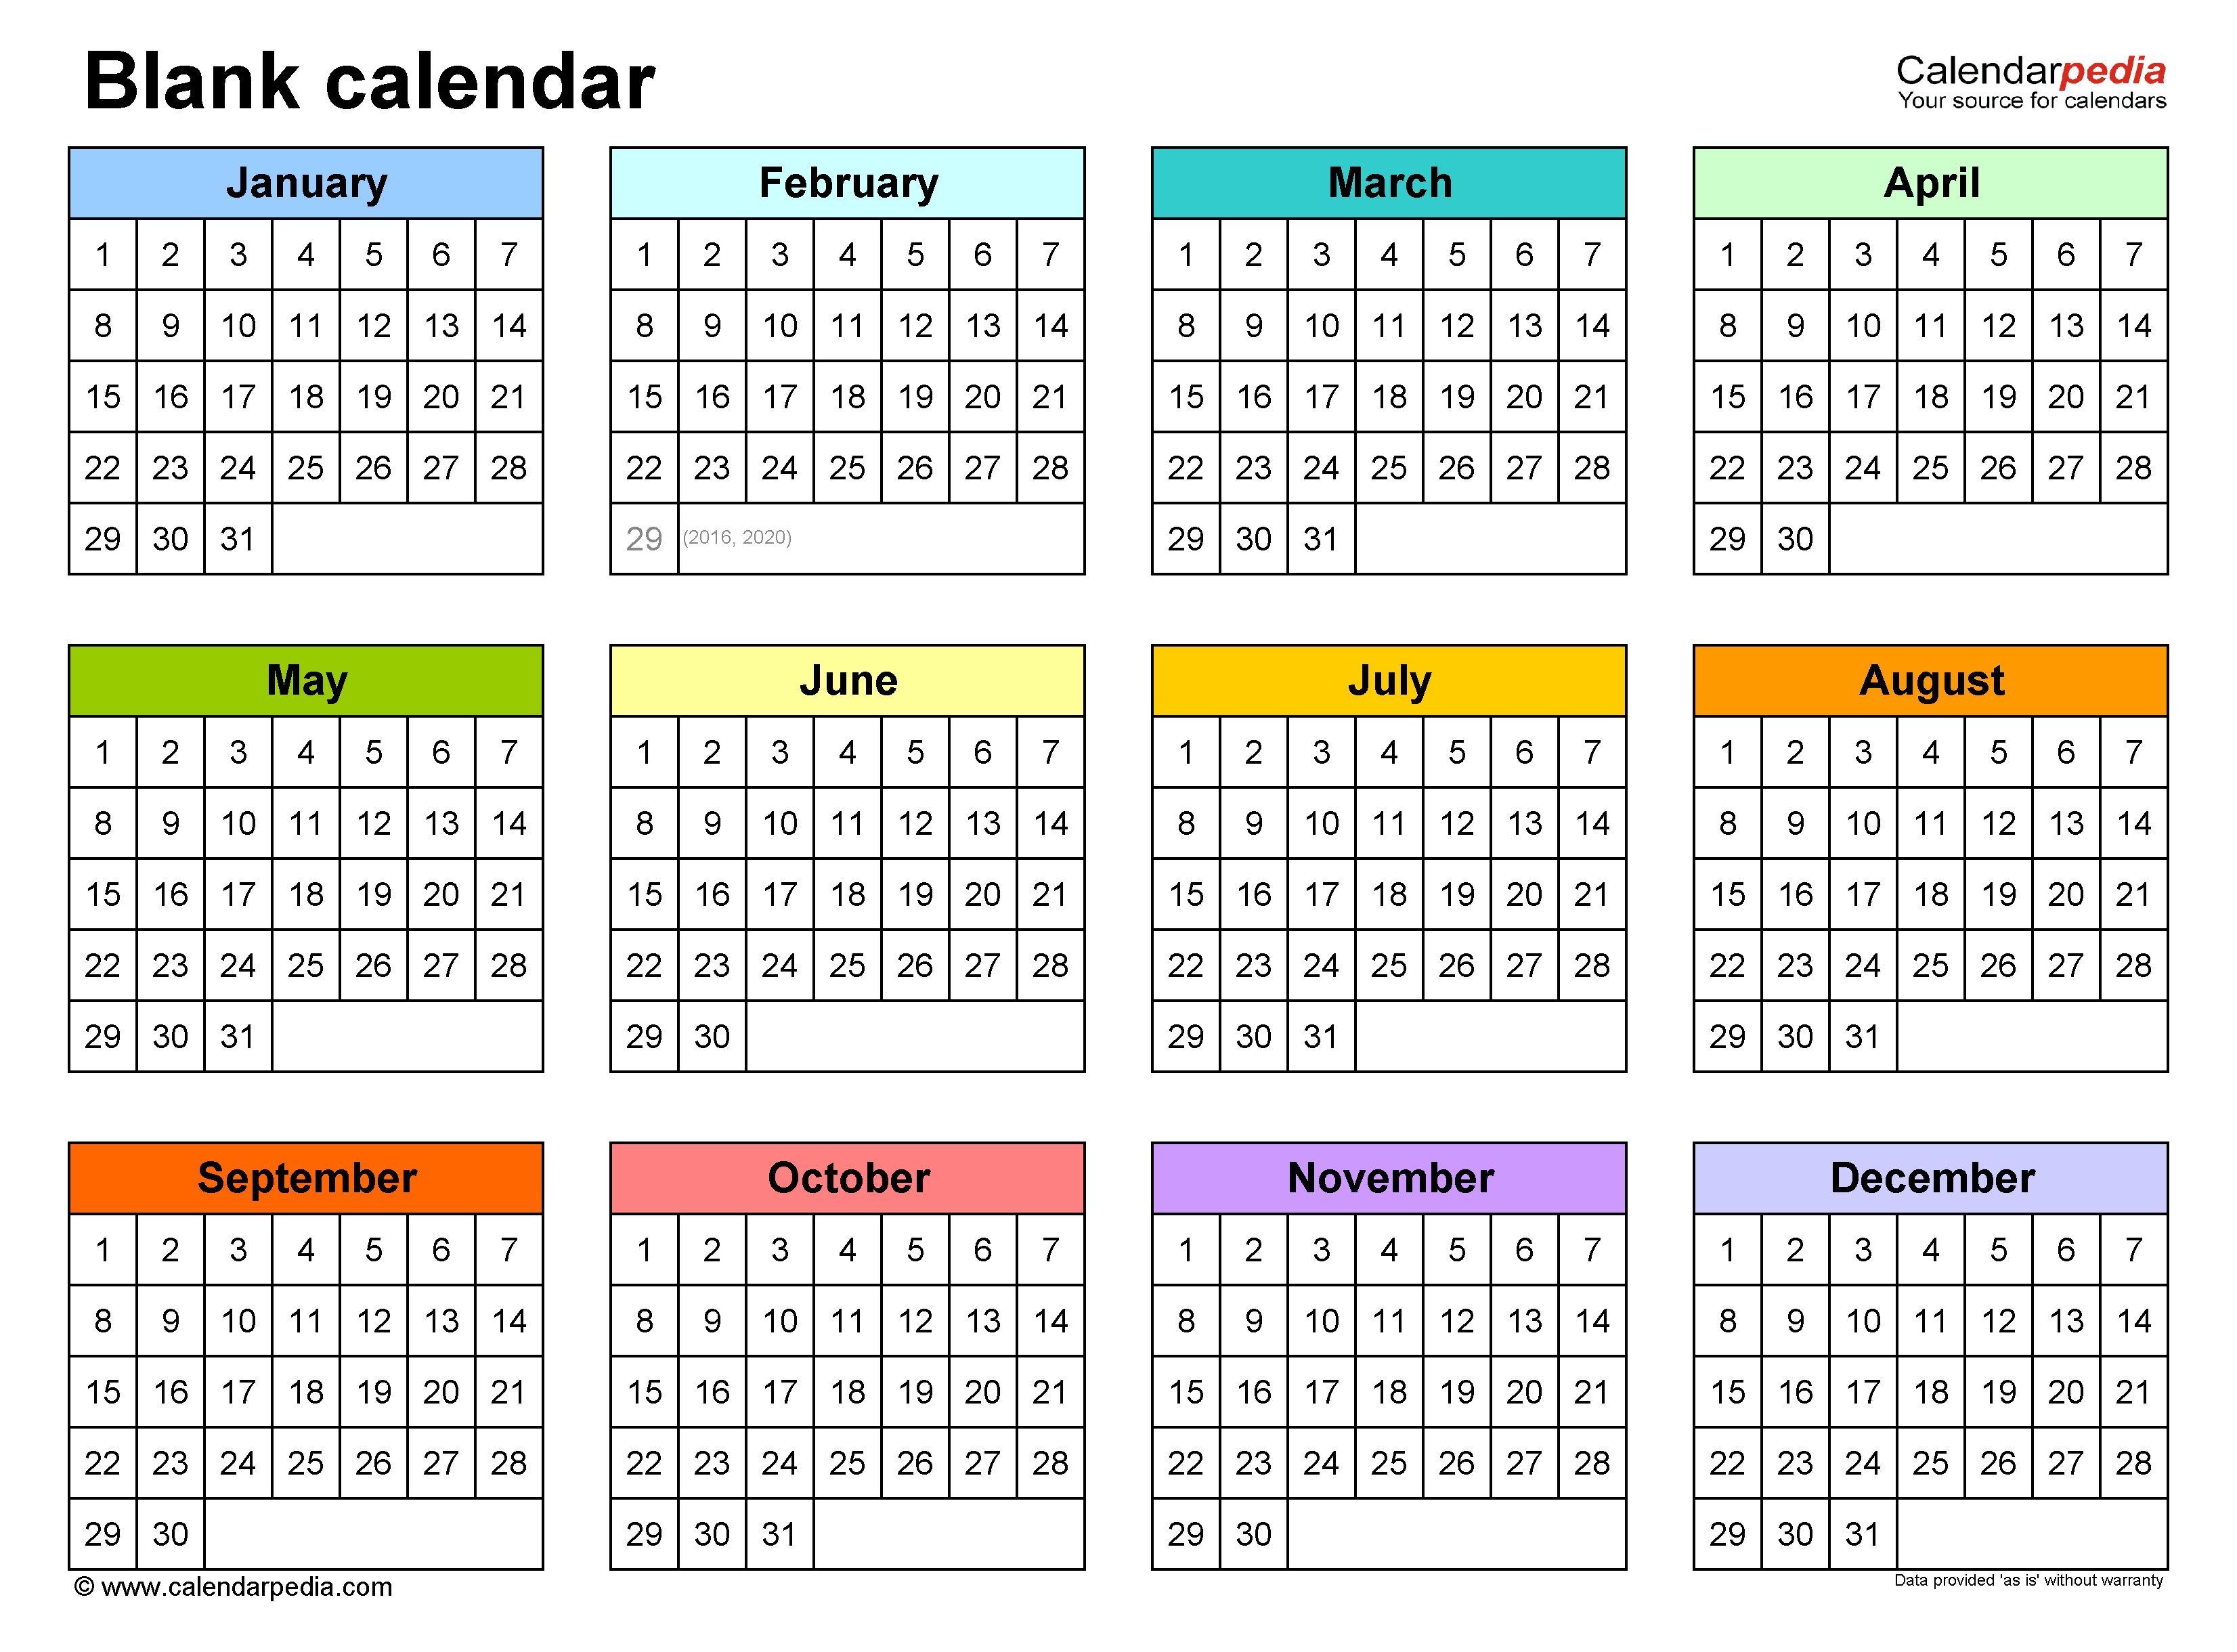 Blank Calendars - Free Printable Microsoft Word Templates Year Calendar Template Word